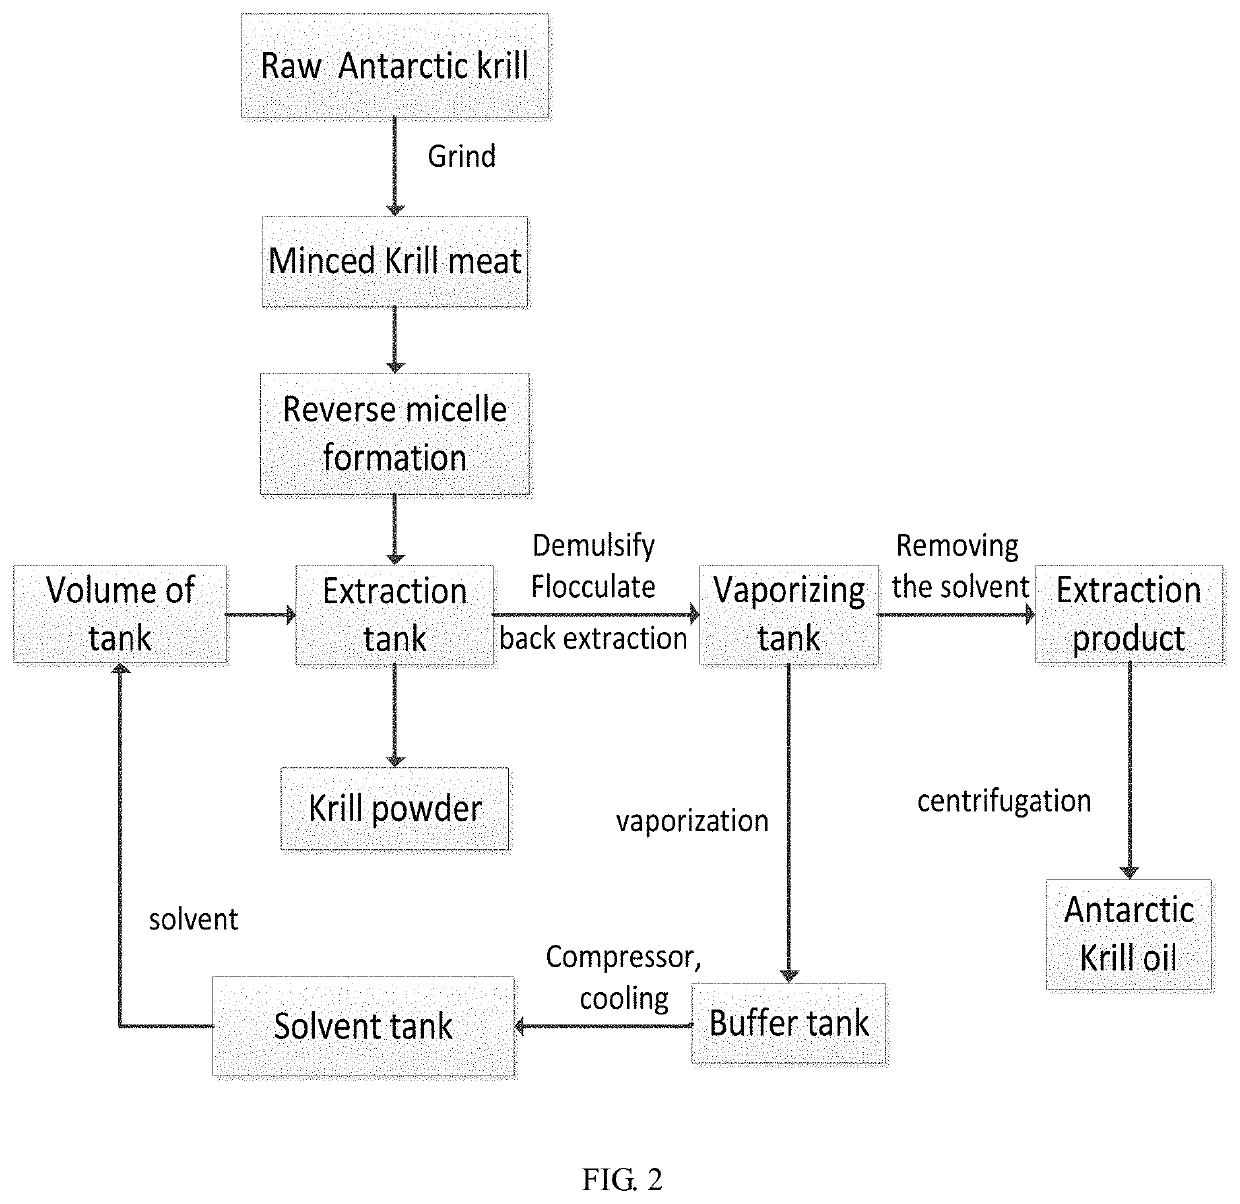 Method for extracting heat-sensitive antarctic krill oil